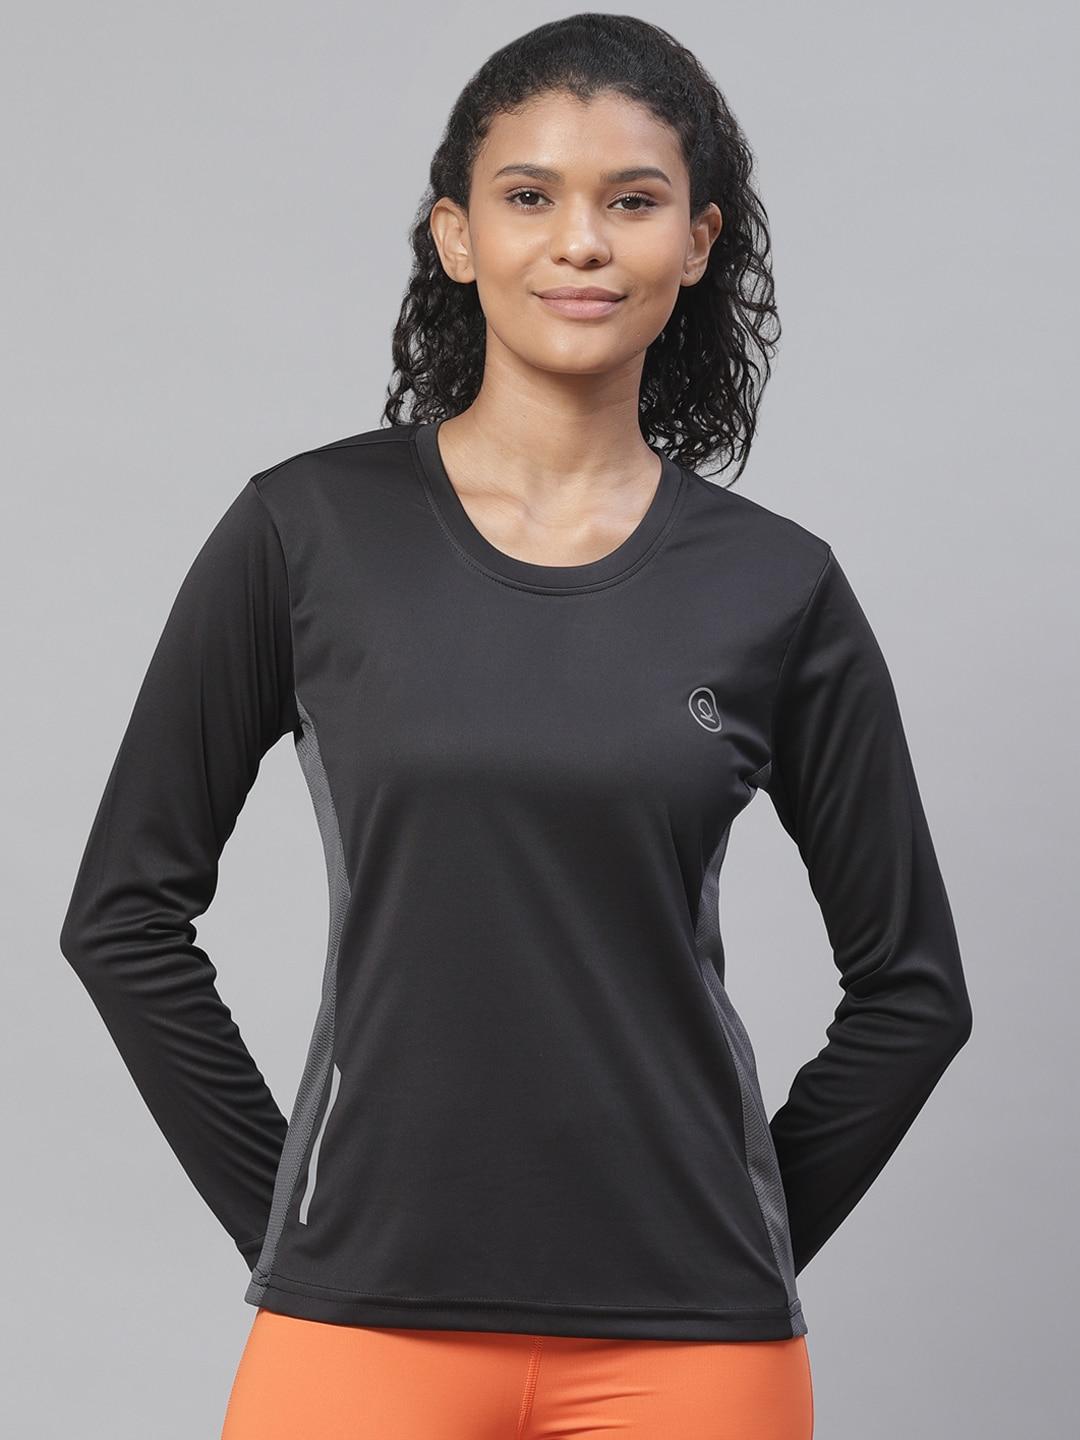 chkokko-women-black-&-grey-colourblocked-round-neck-yoga-t-shirt